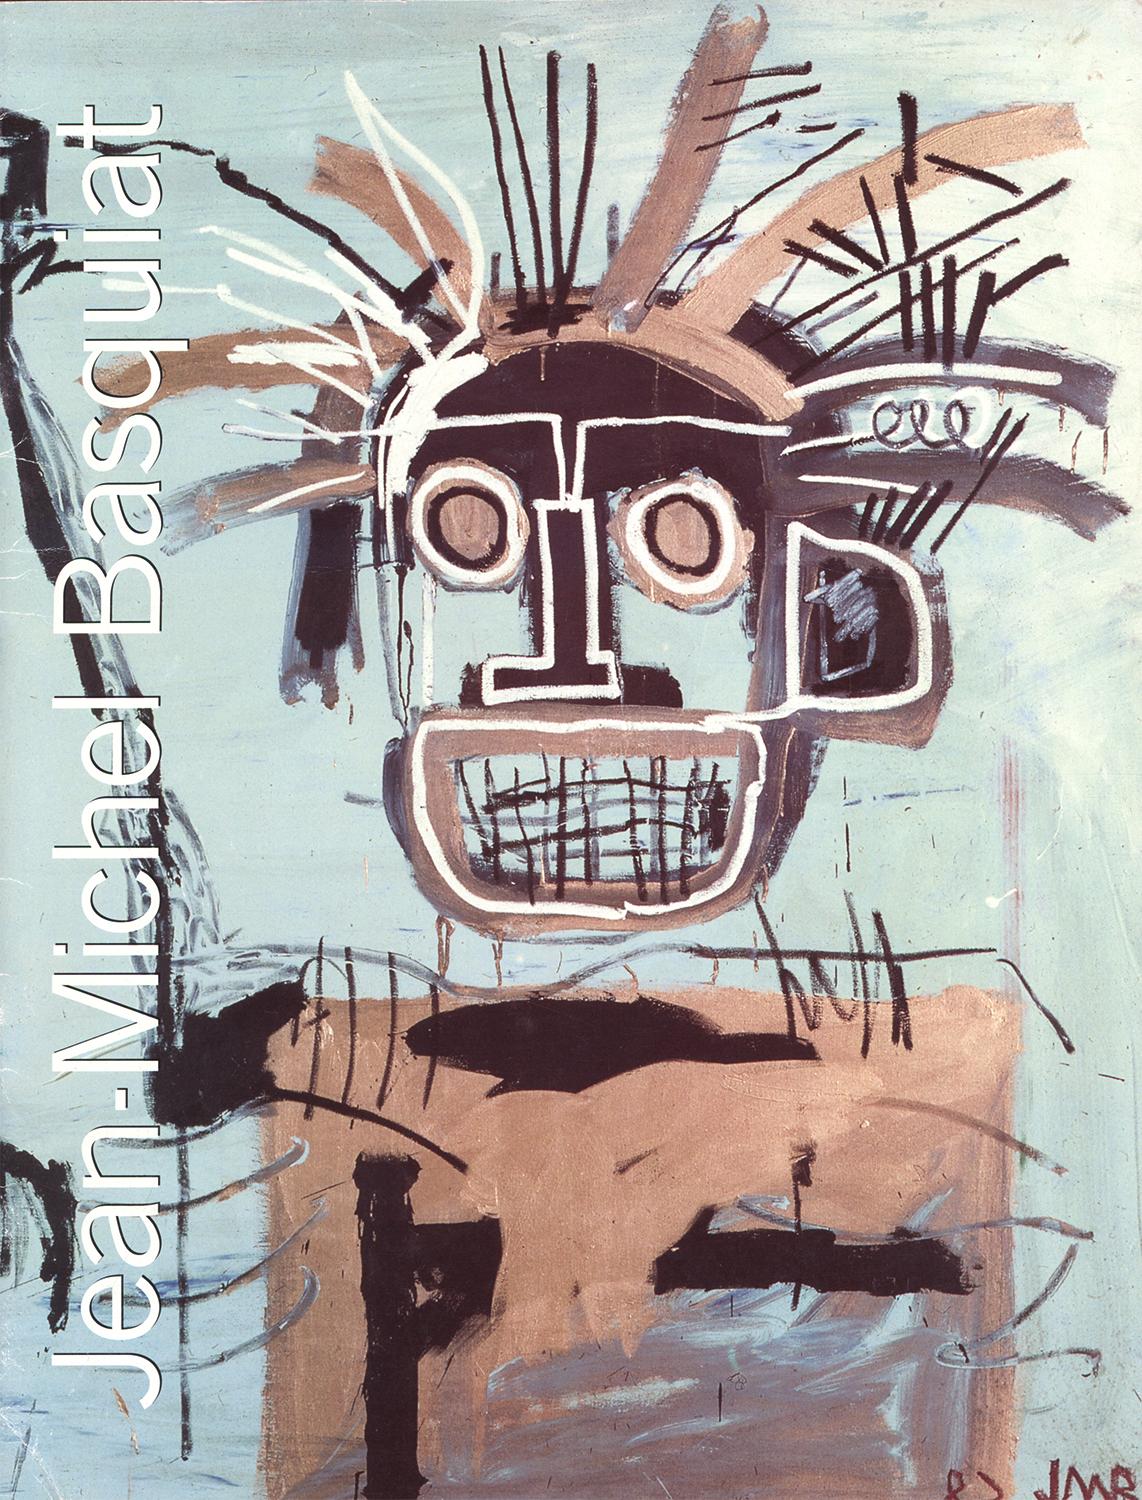 Abstract Print after Jean-Michel Basquiat - Galerie Basquiat Serpentine, Londres, 1996 (catalogue d'exposition)